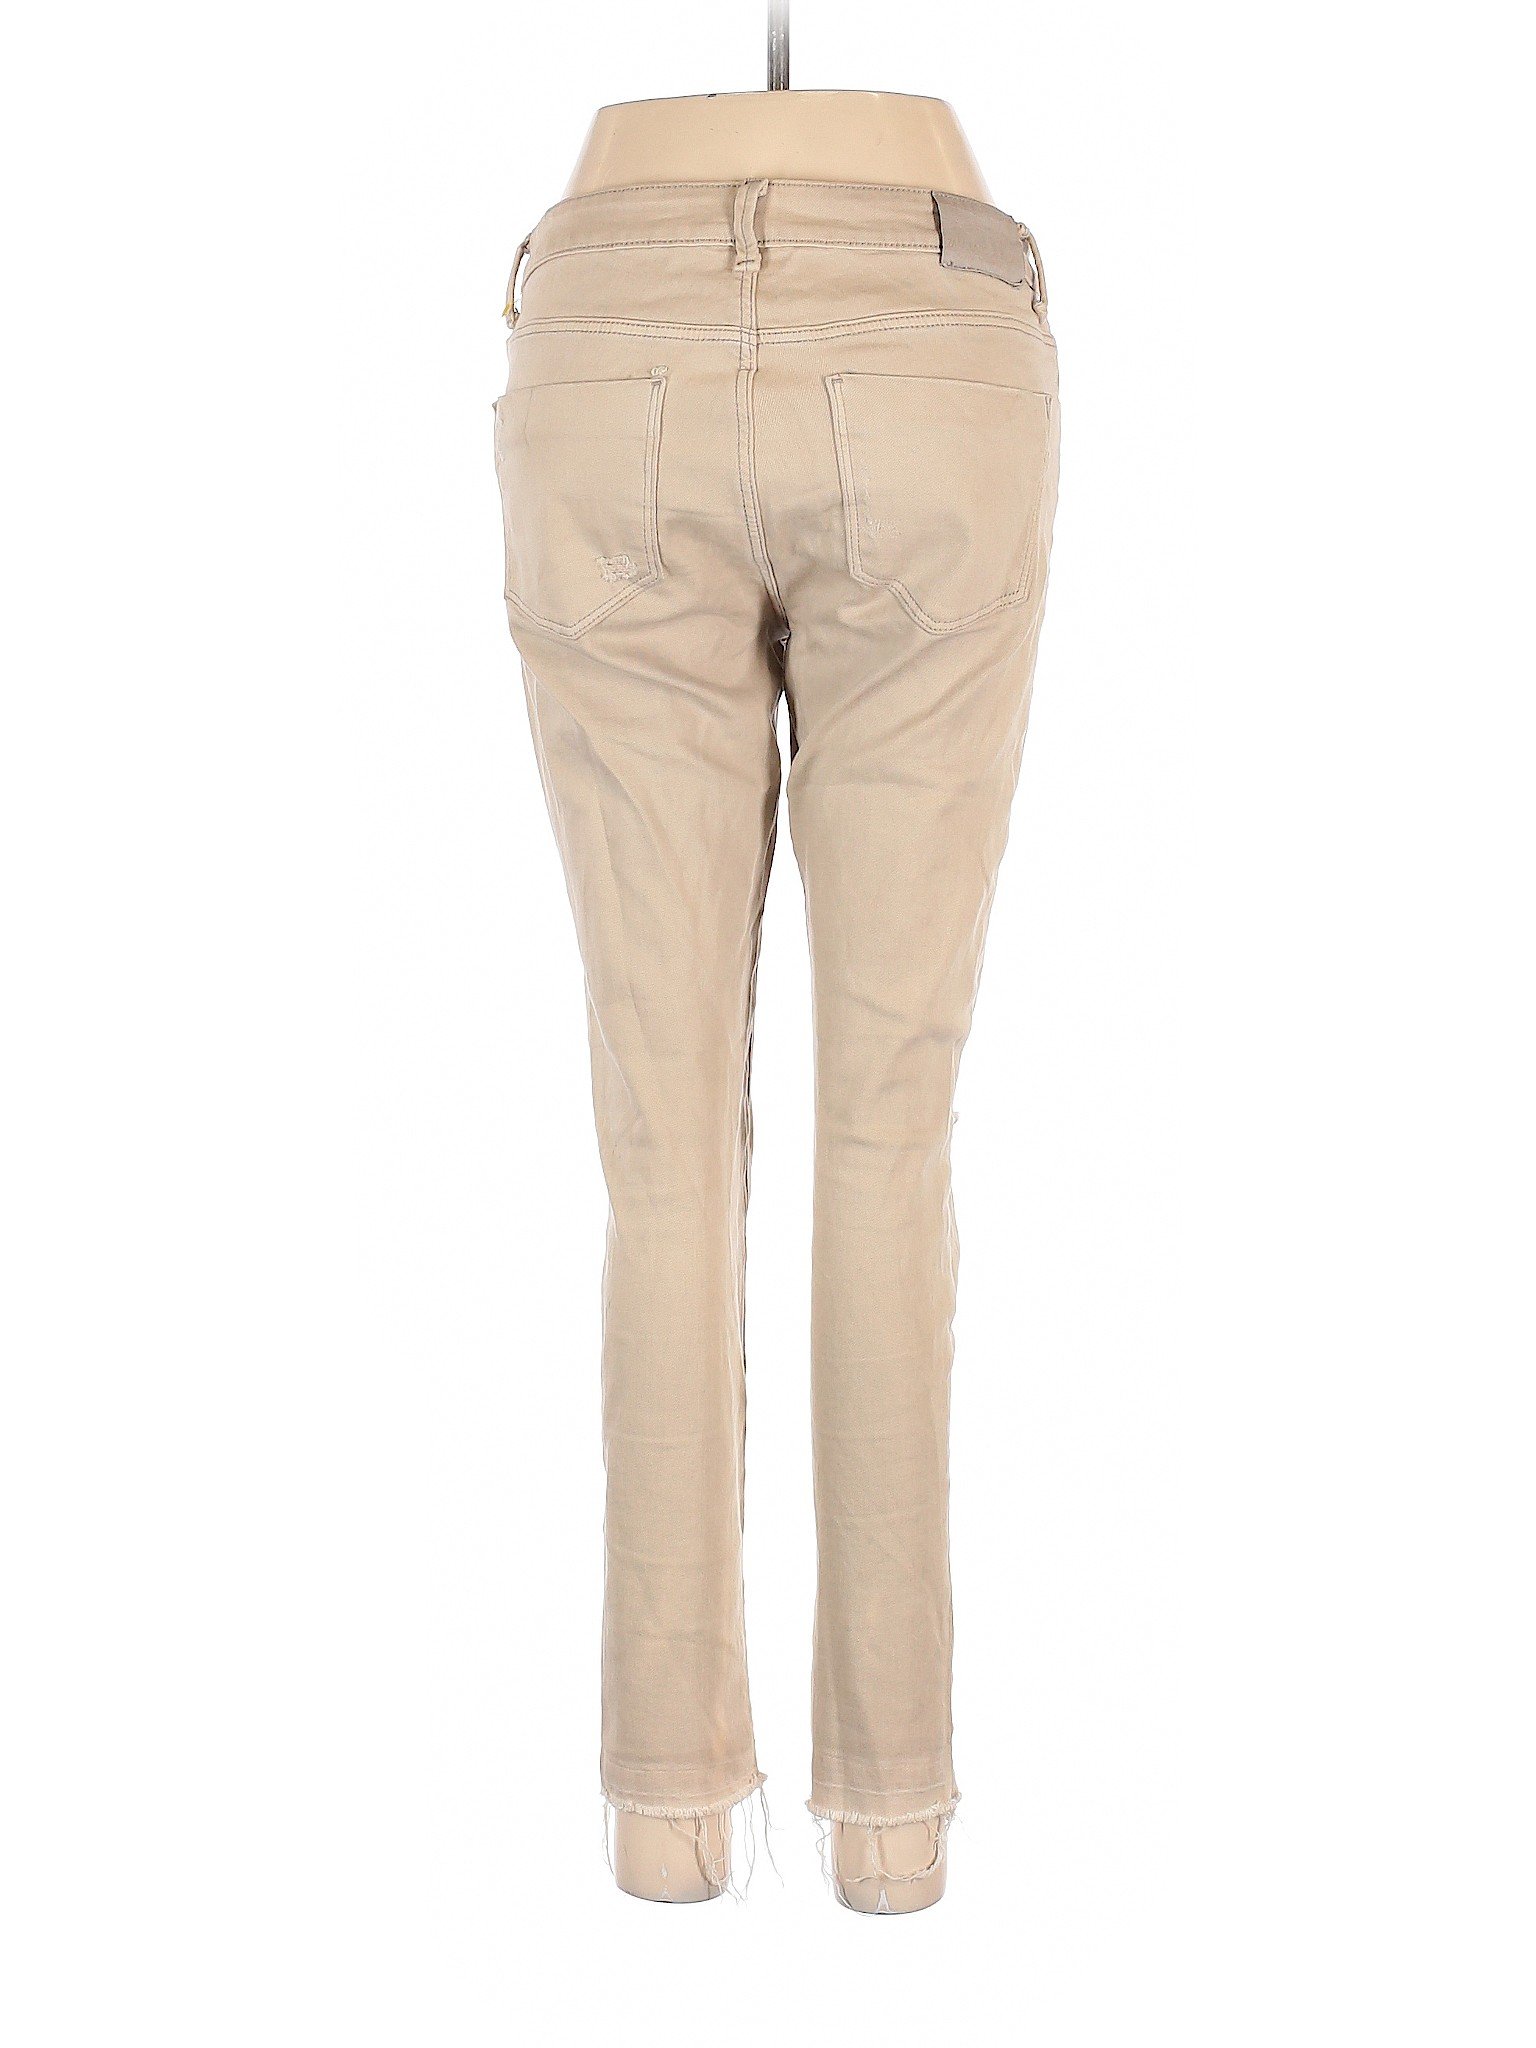 Zara Basic Women Brown Jeans 6 | eBay